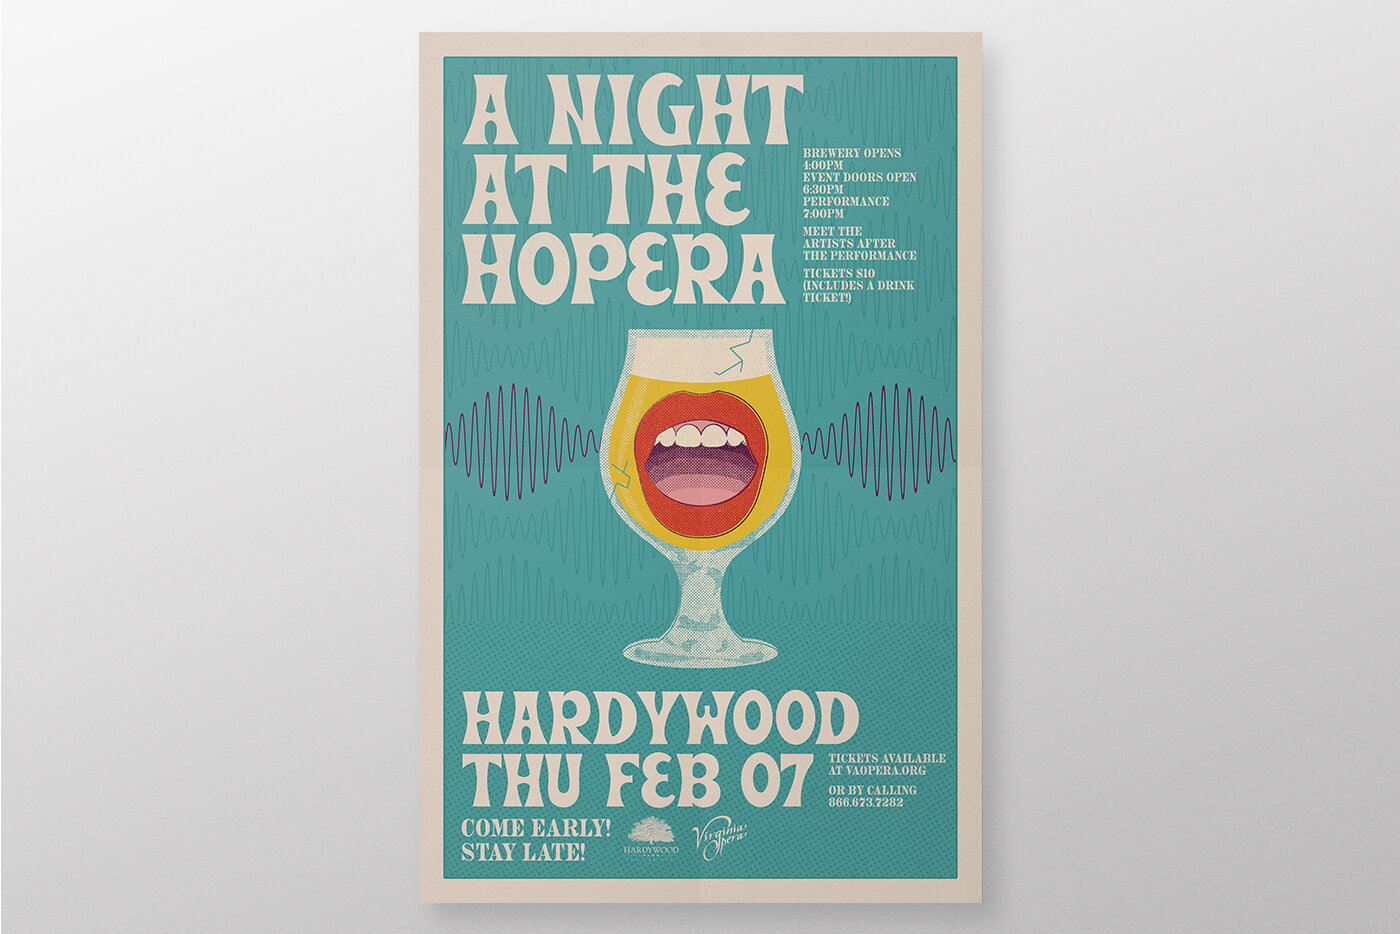 A Night at the Hopera Virginia Opera Concert Poster